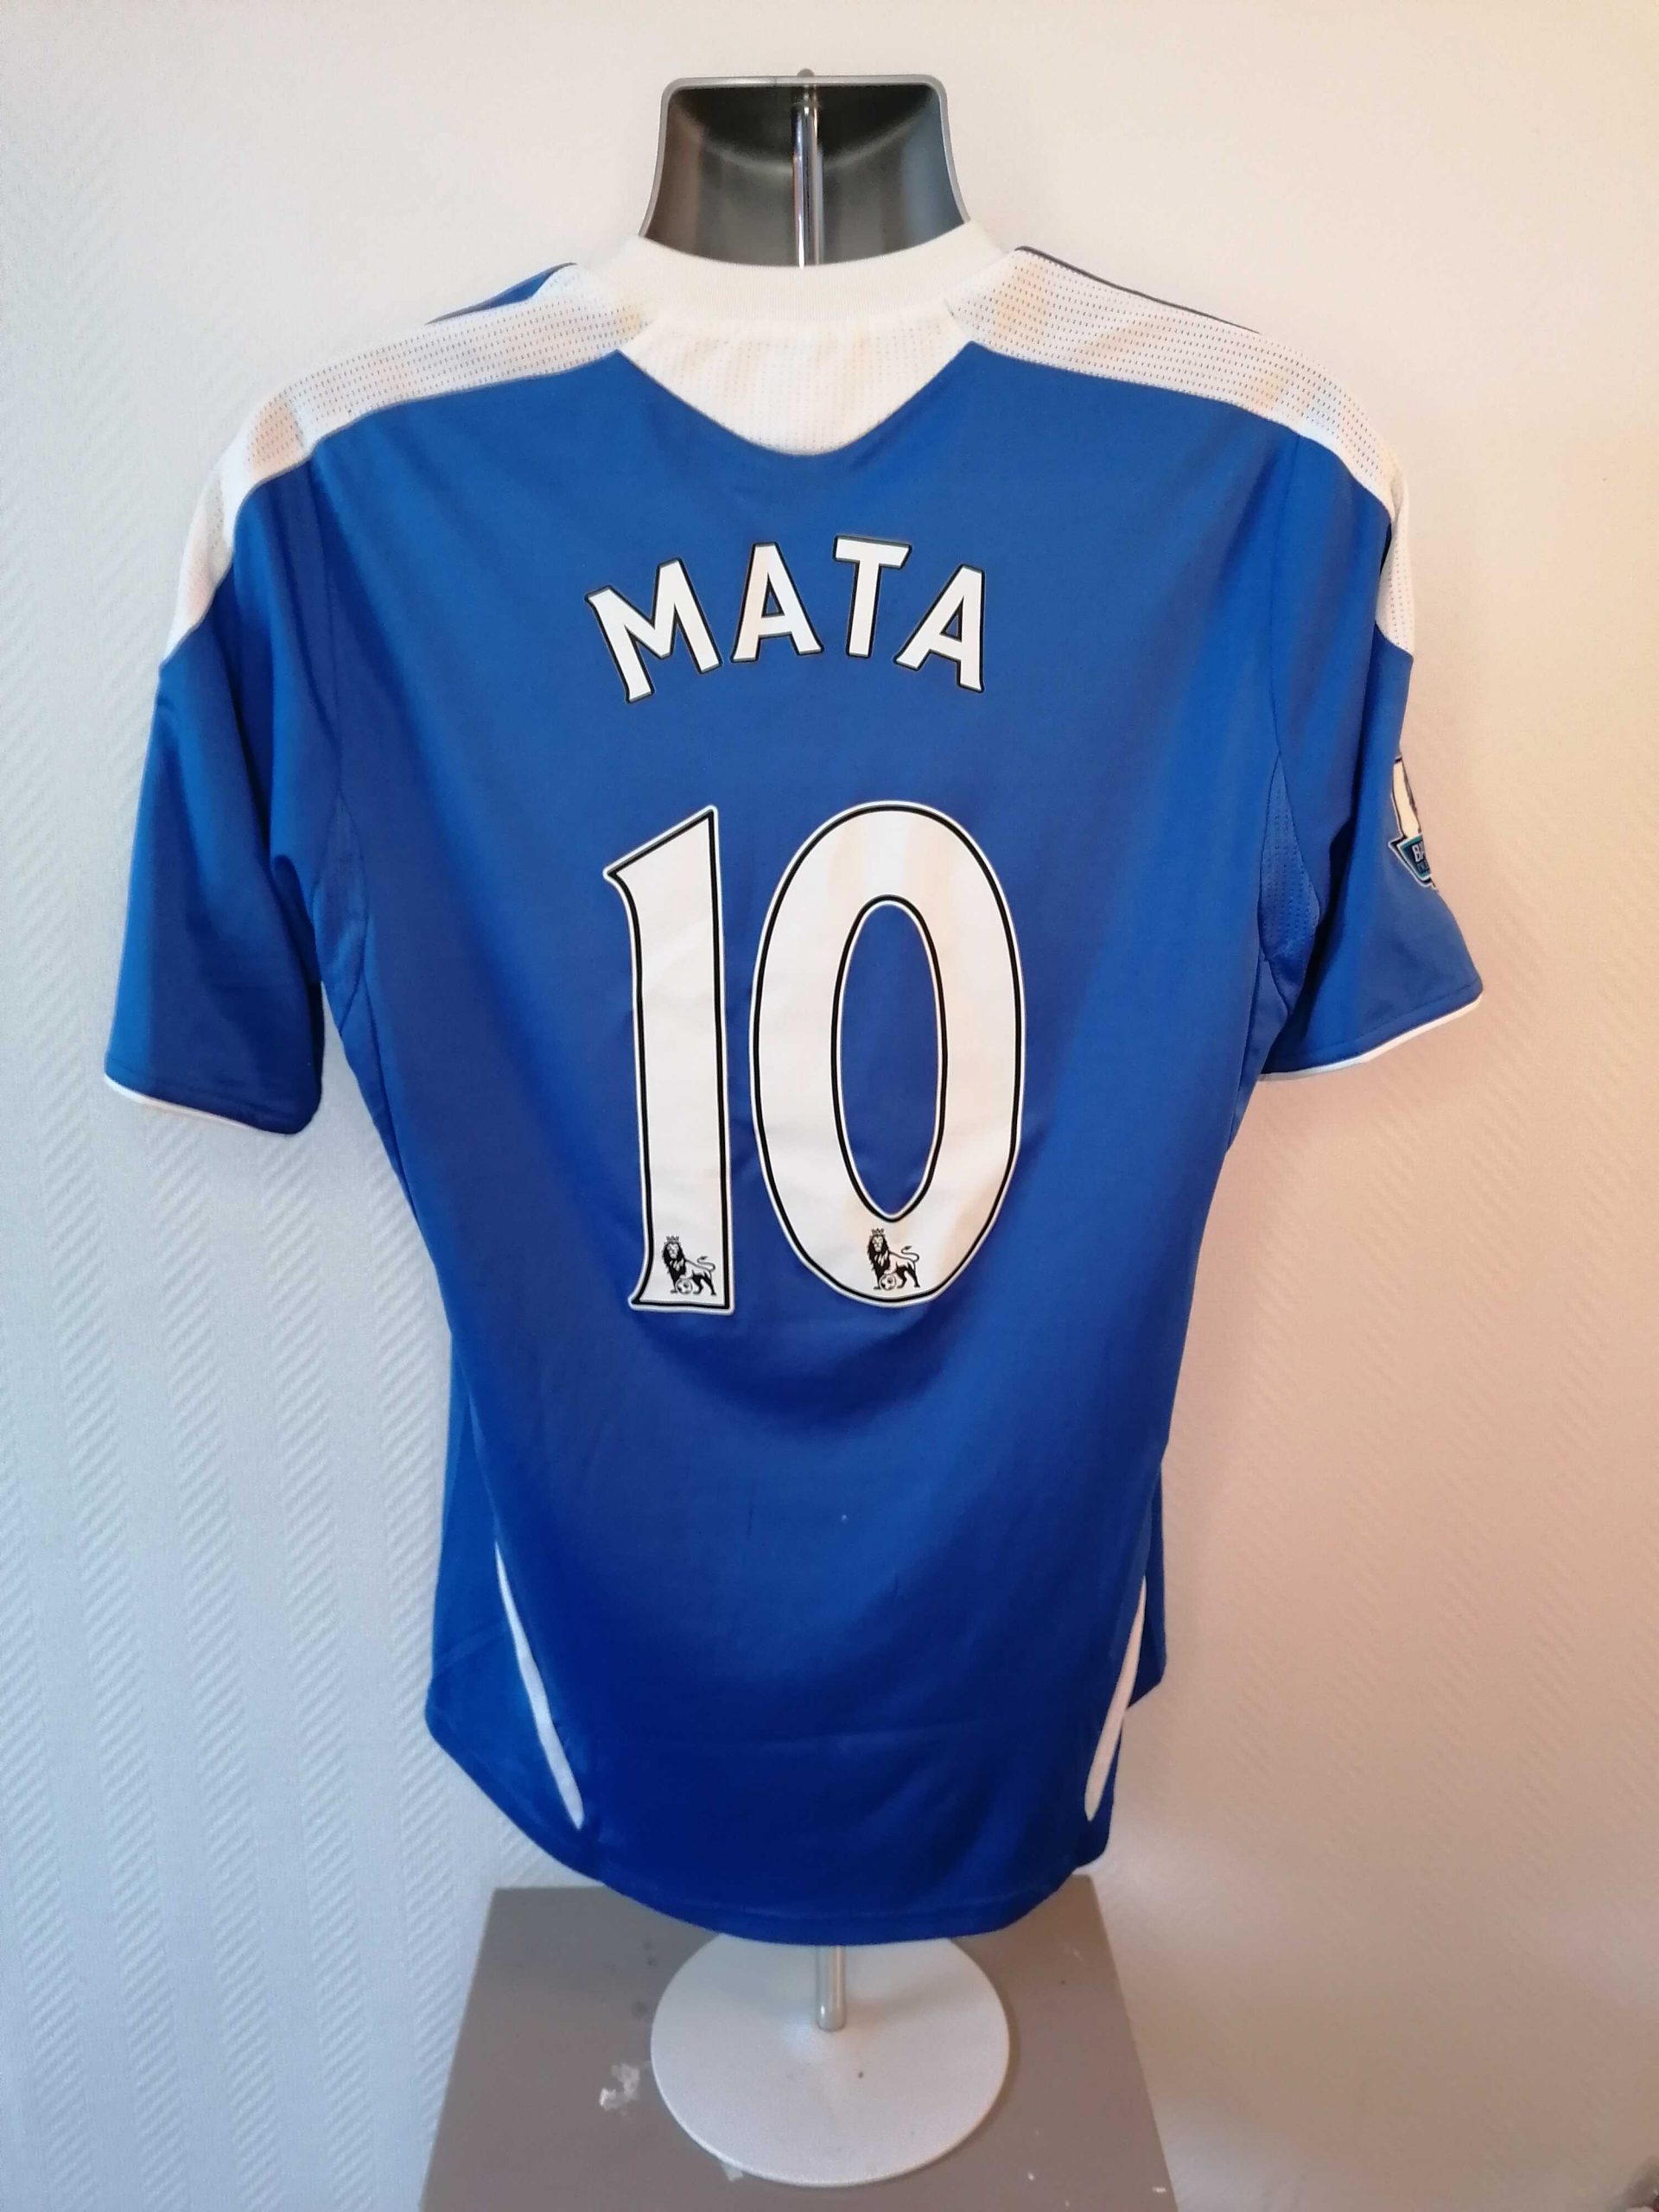 Chelsea 2011-12 EPL home shirt adidas football top Mata 10 size M 